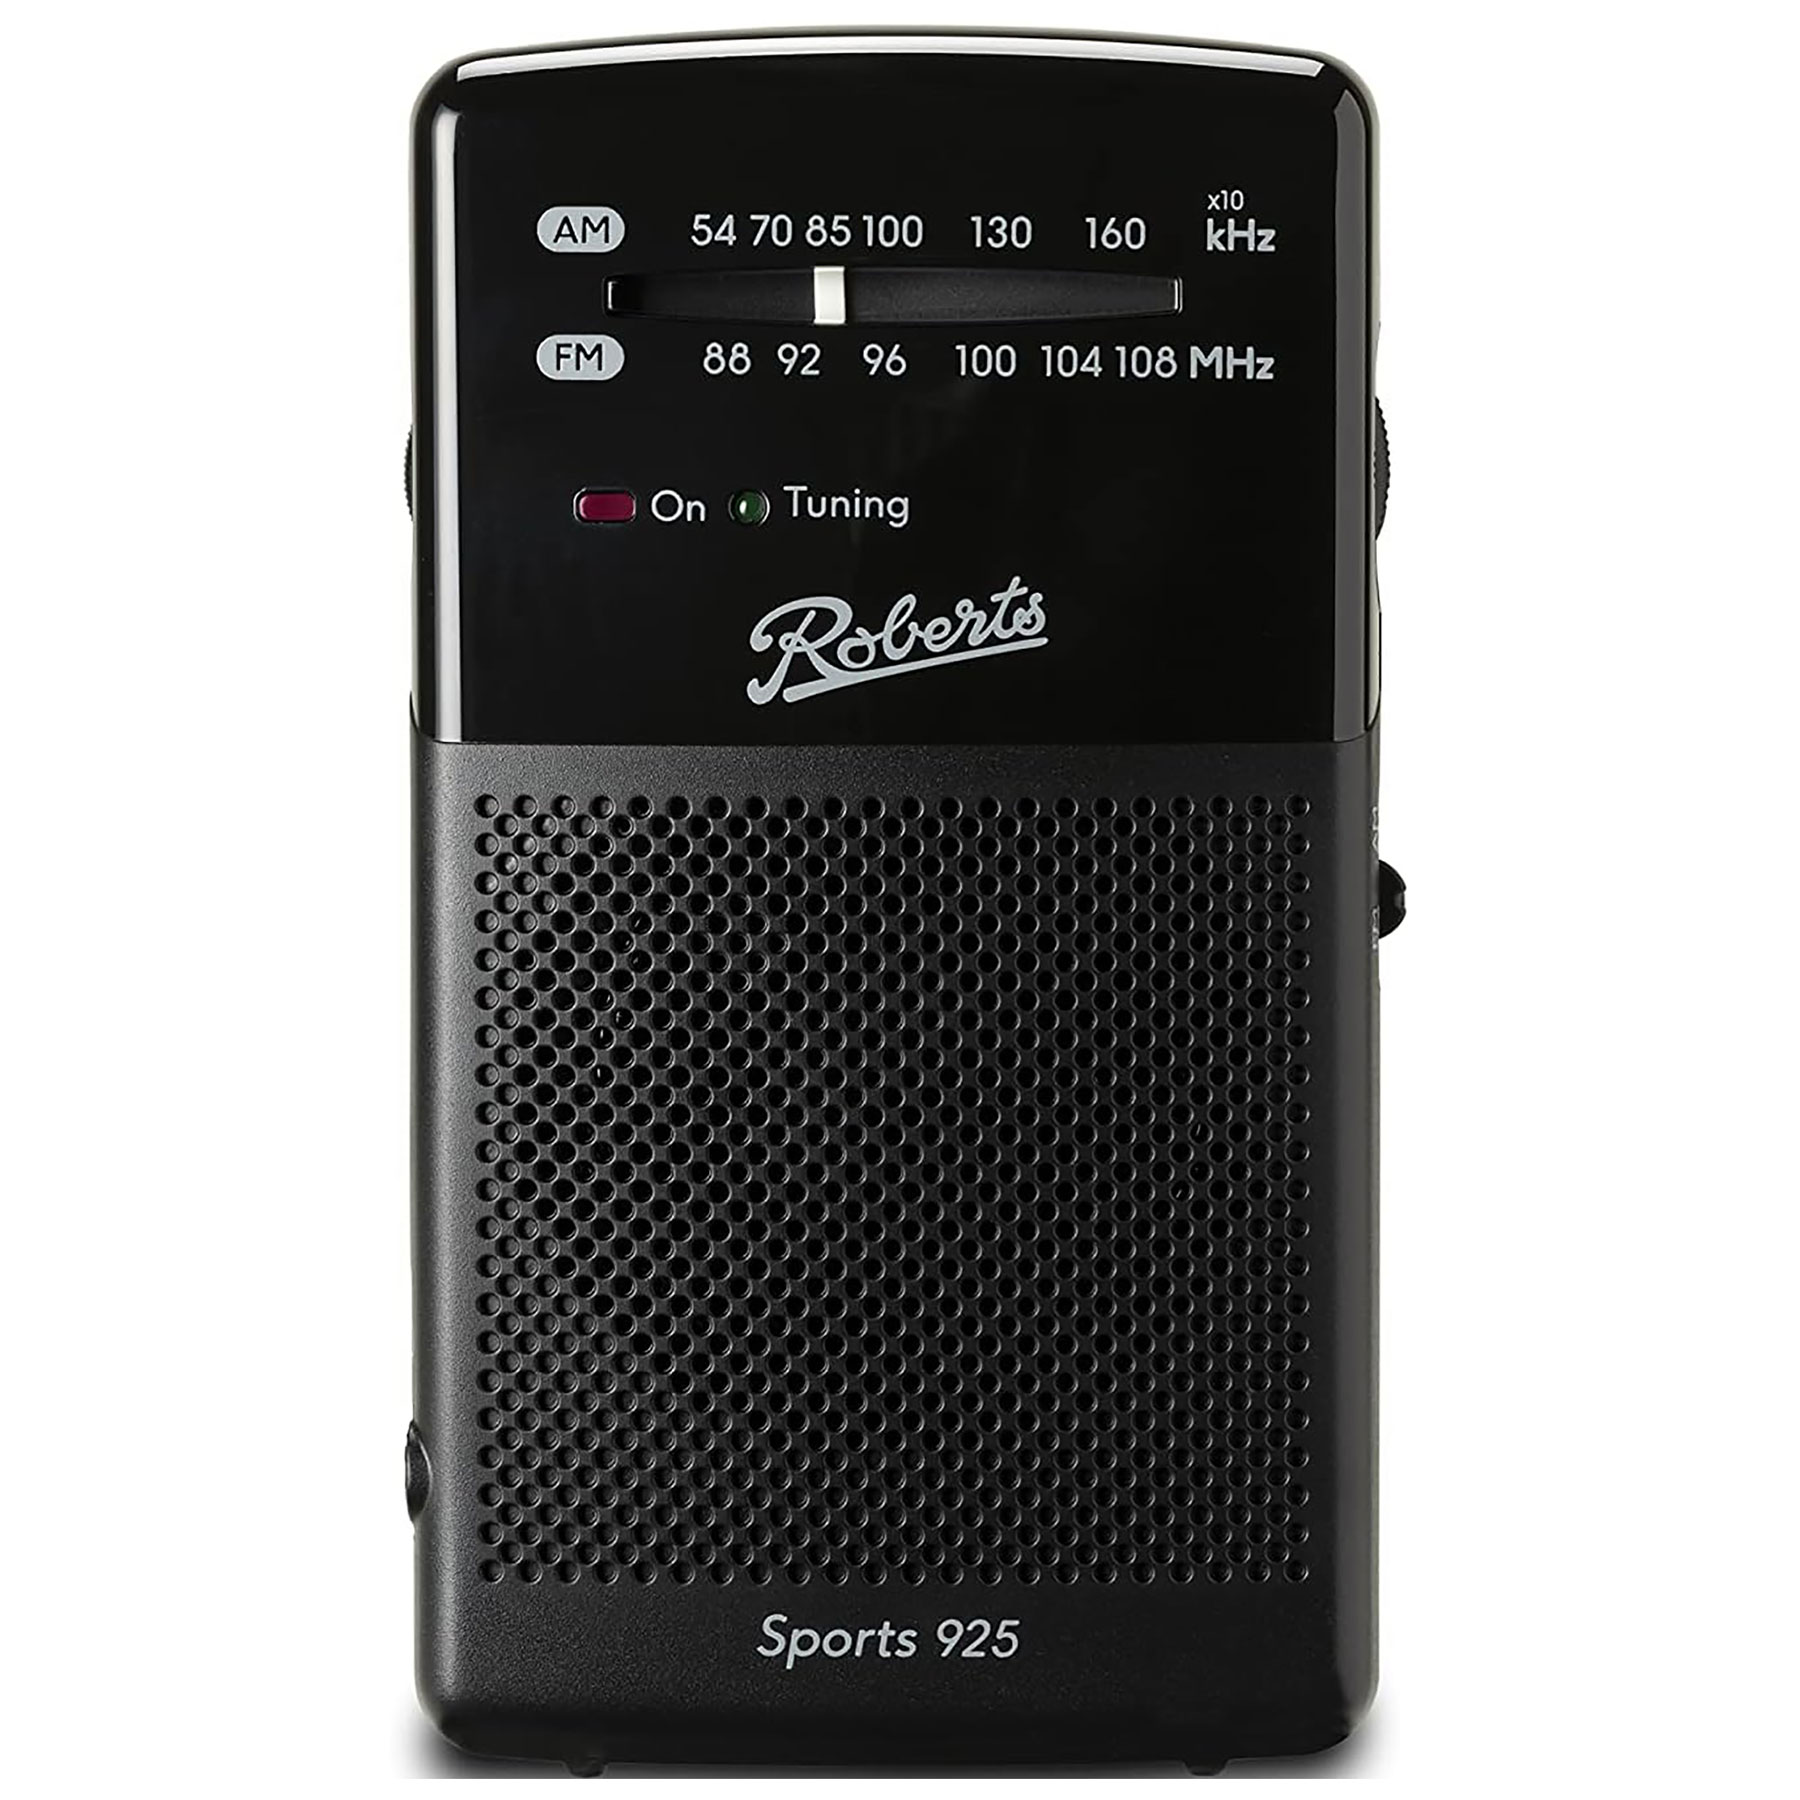 Image of Roberts SPORTS925 2 Band Analogue Radio in Black AM FM Wavebands